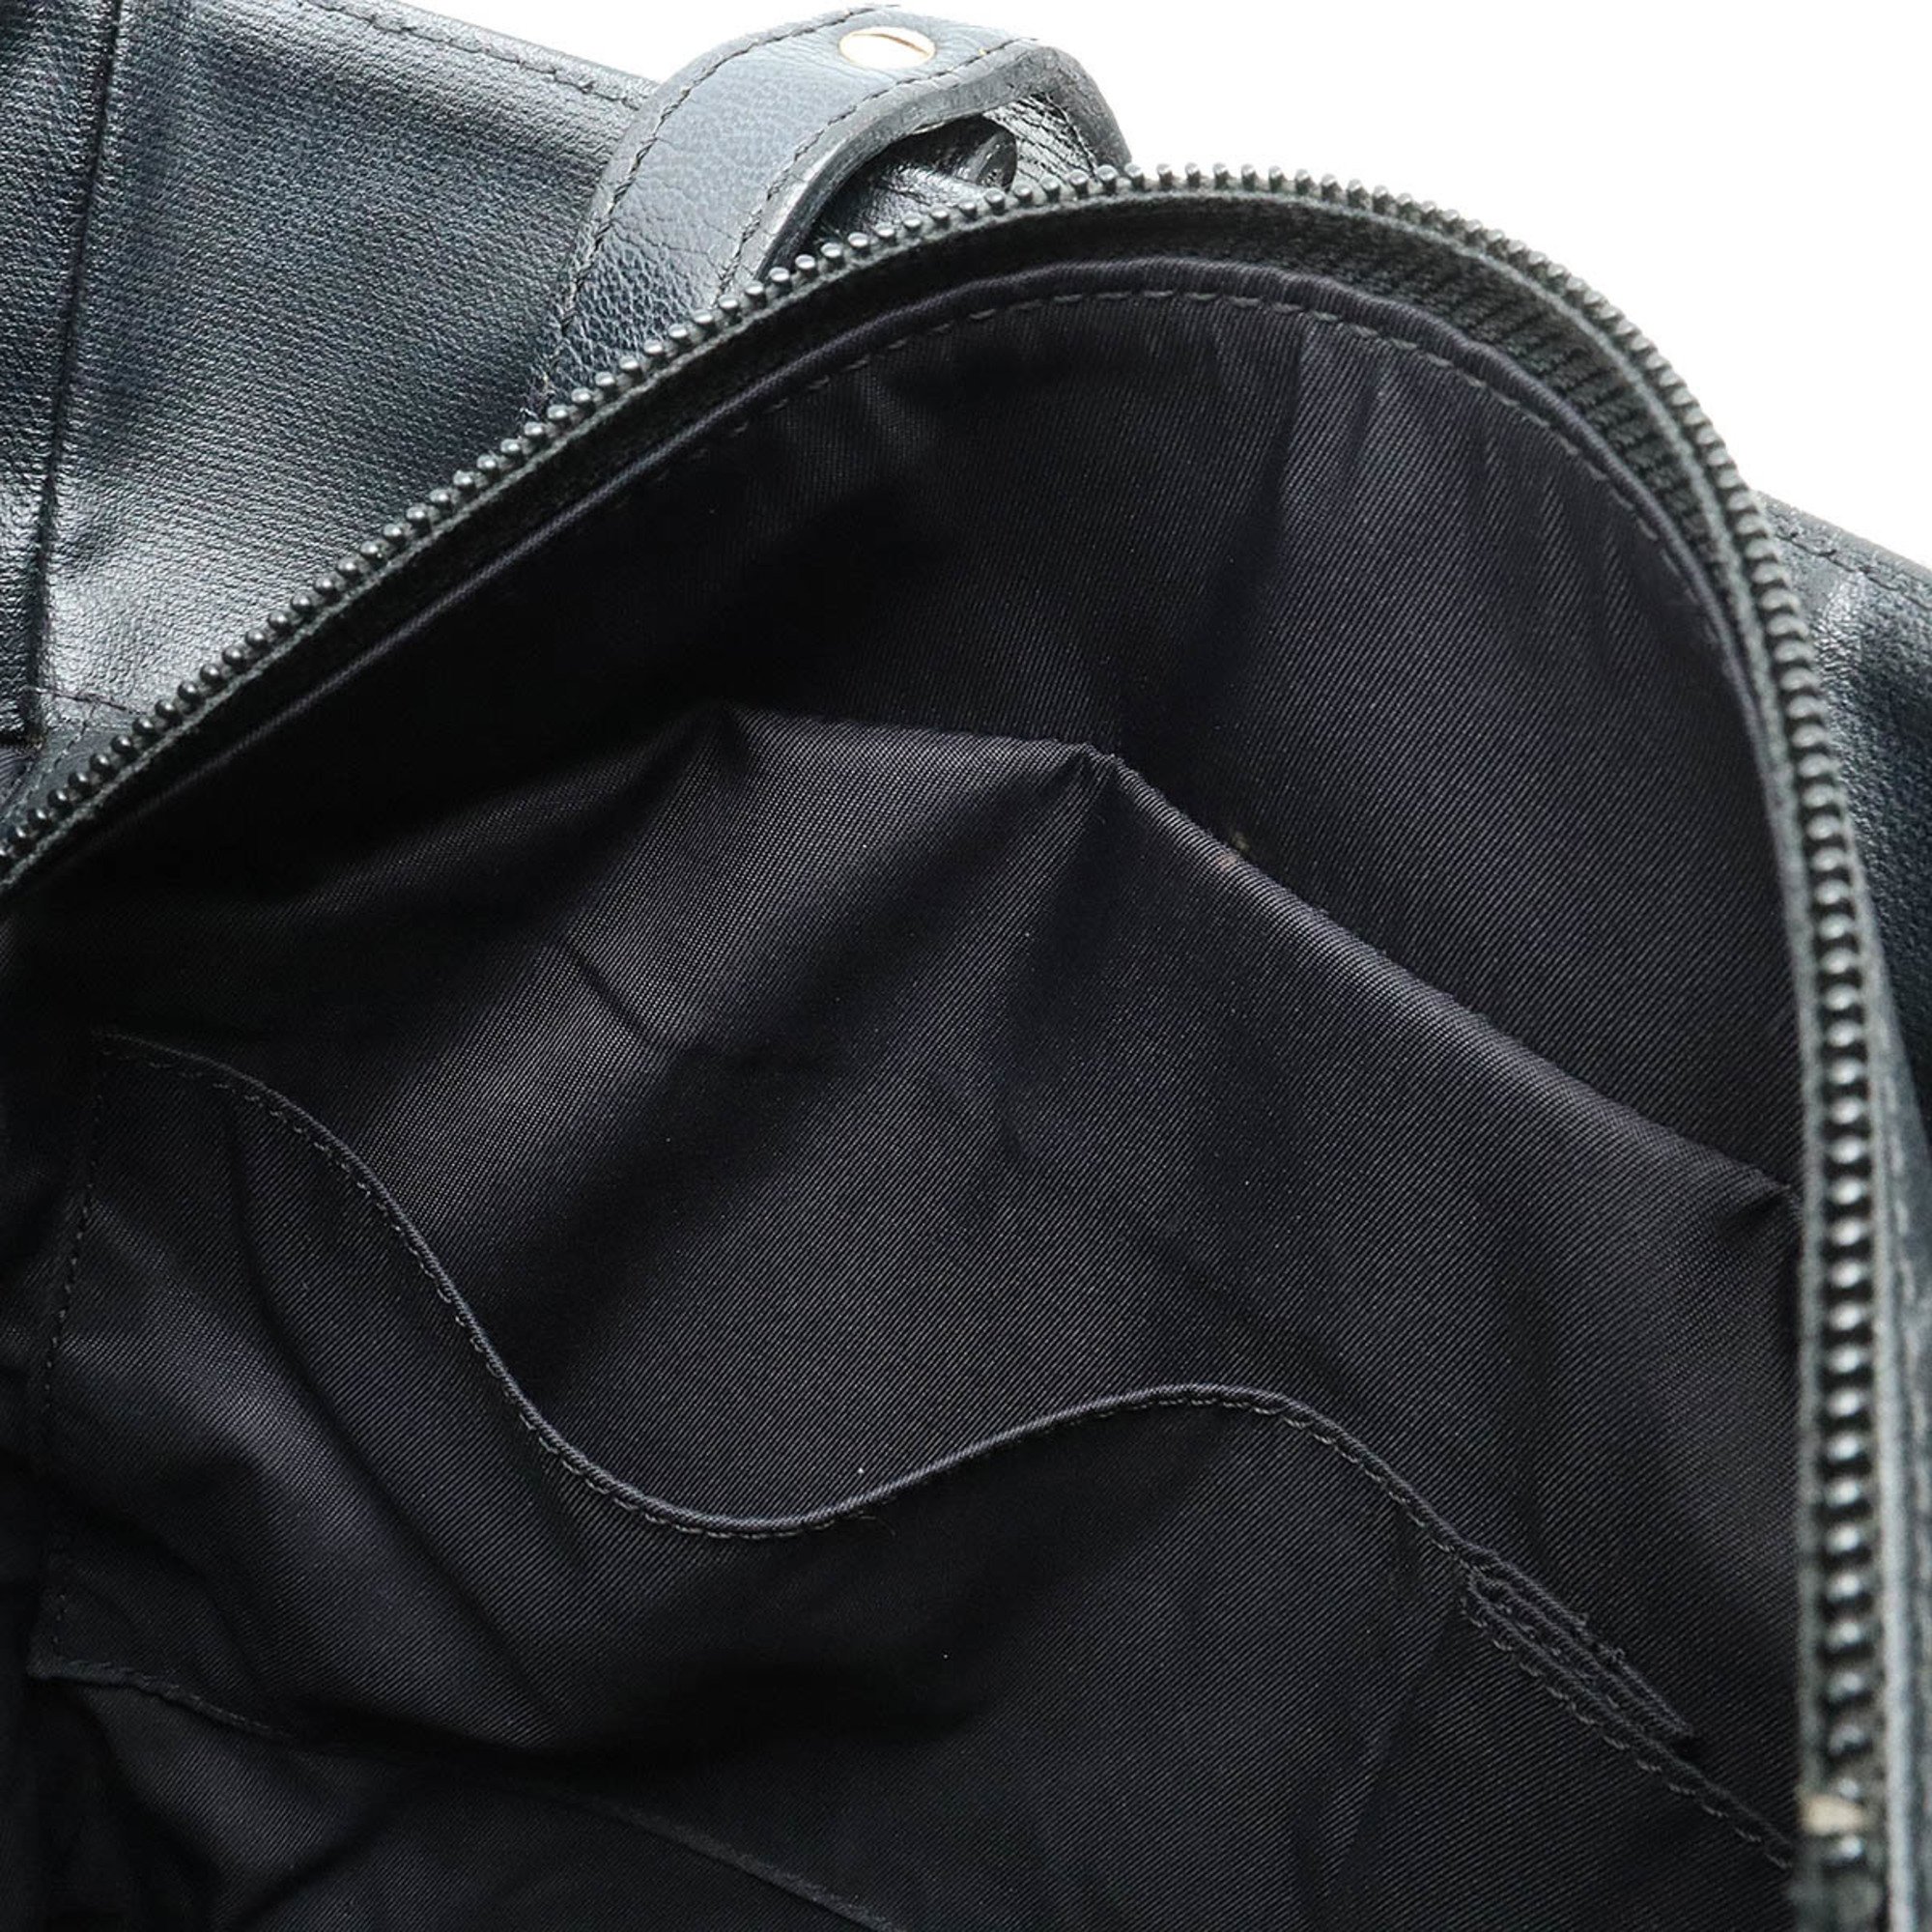 CHANEL Paris Biarritz Tote PM Bag Shoulder Coated Canvas Leather Black A34208